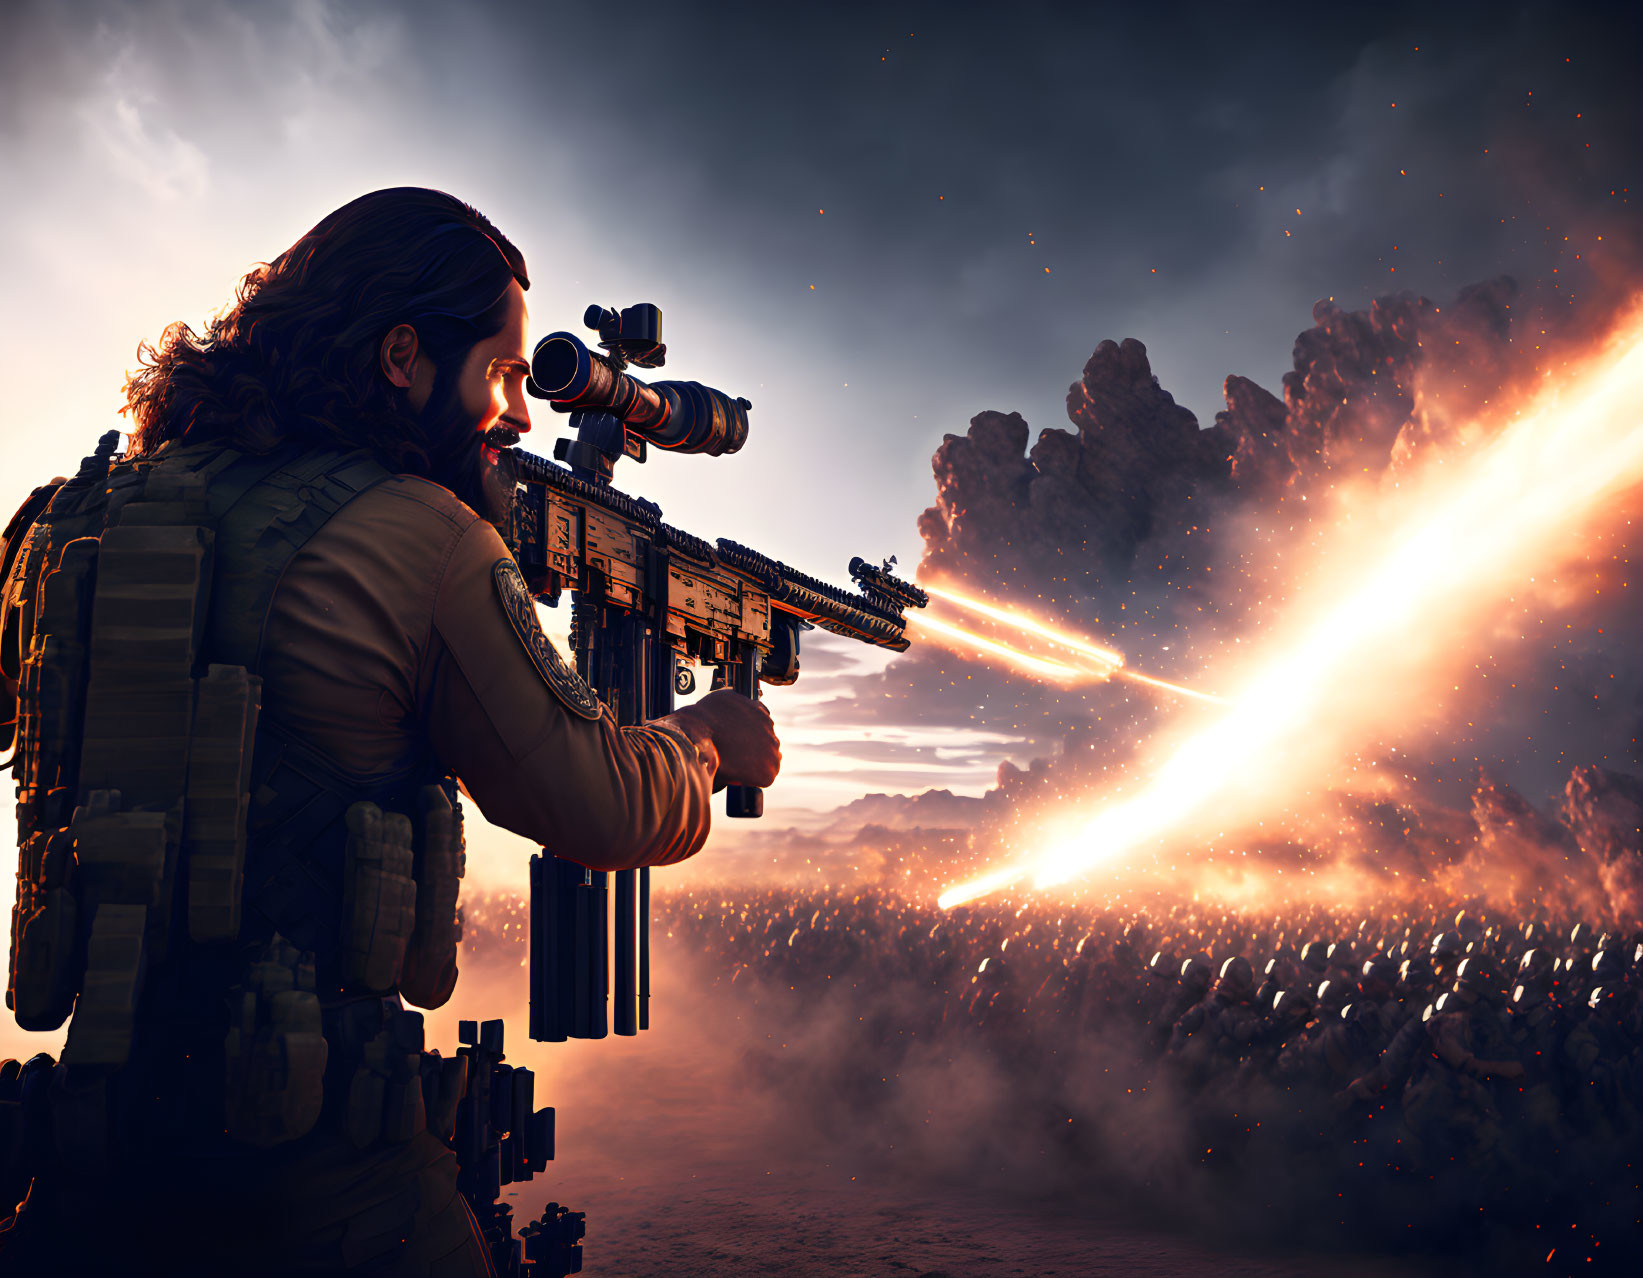 Soldier firing scoped rifle with energy blast against dusky sky